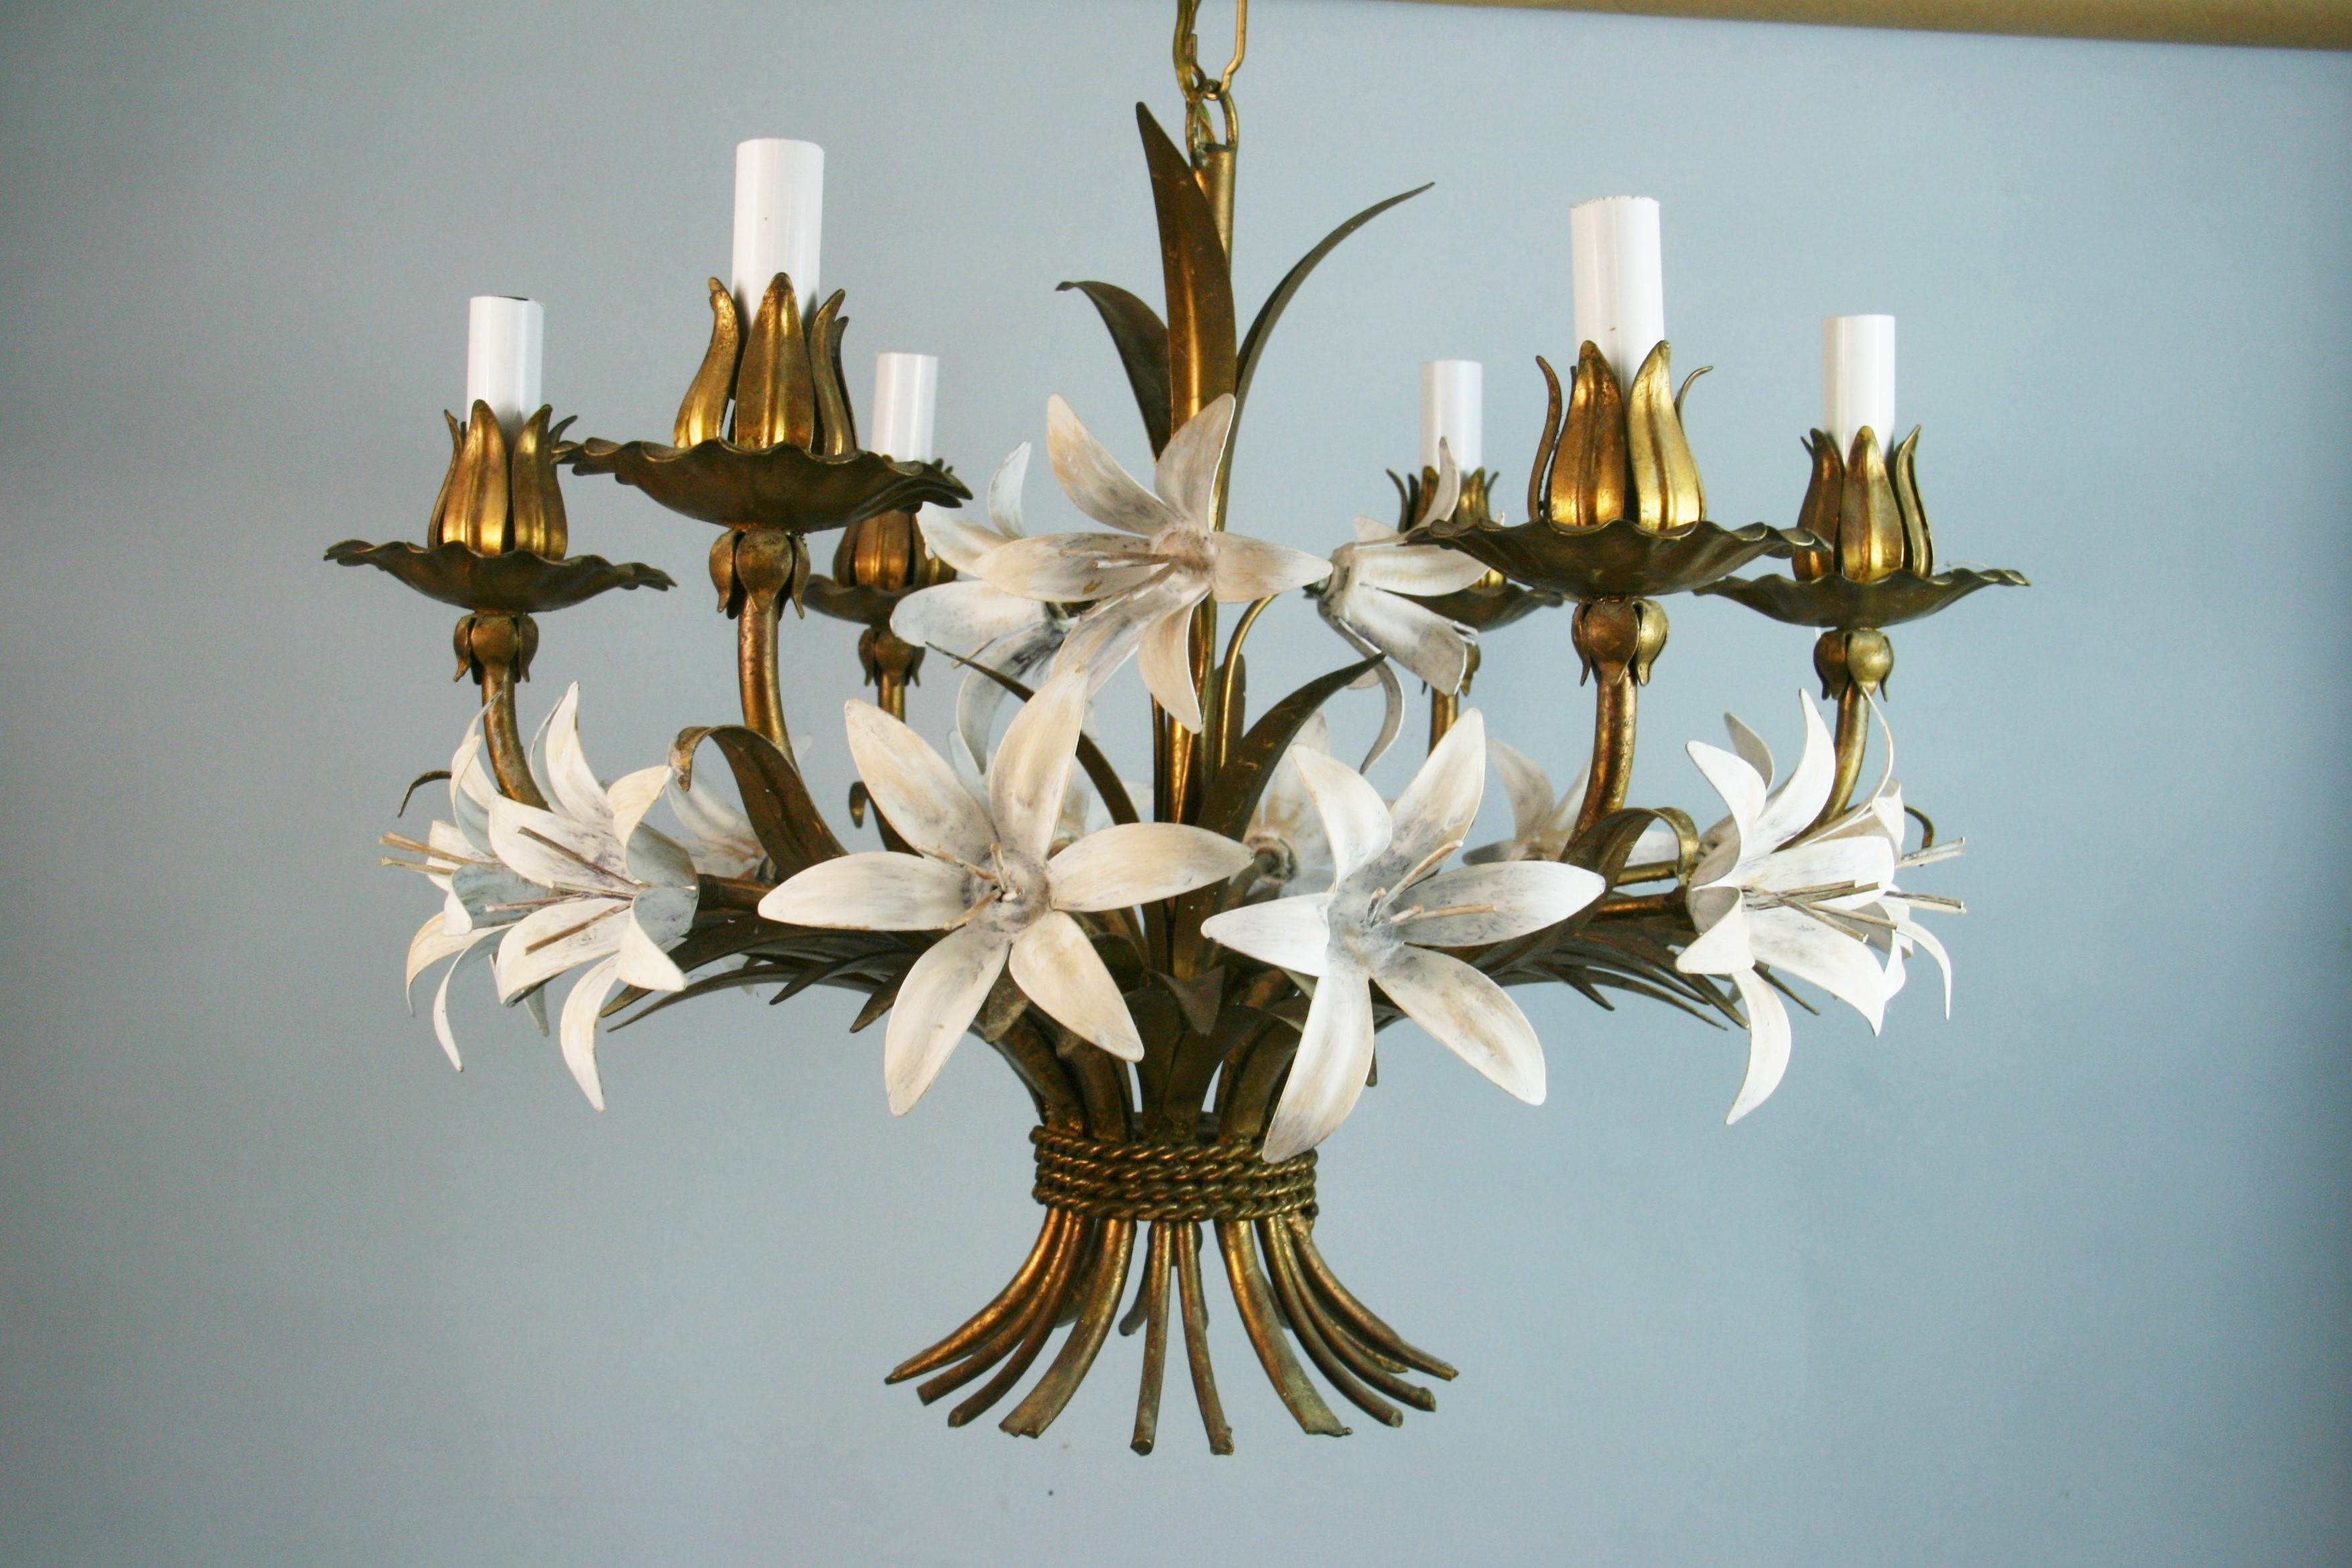 1619 gilt tole Italian six-light chandelier with white flowers.
Take 60 watt max candelabra based bulb.
 